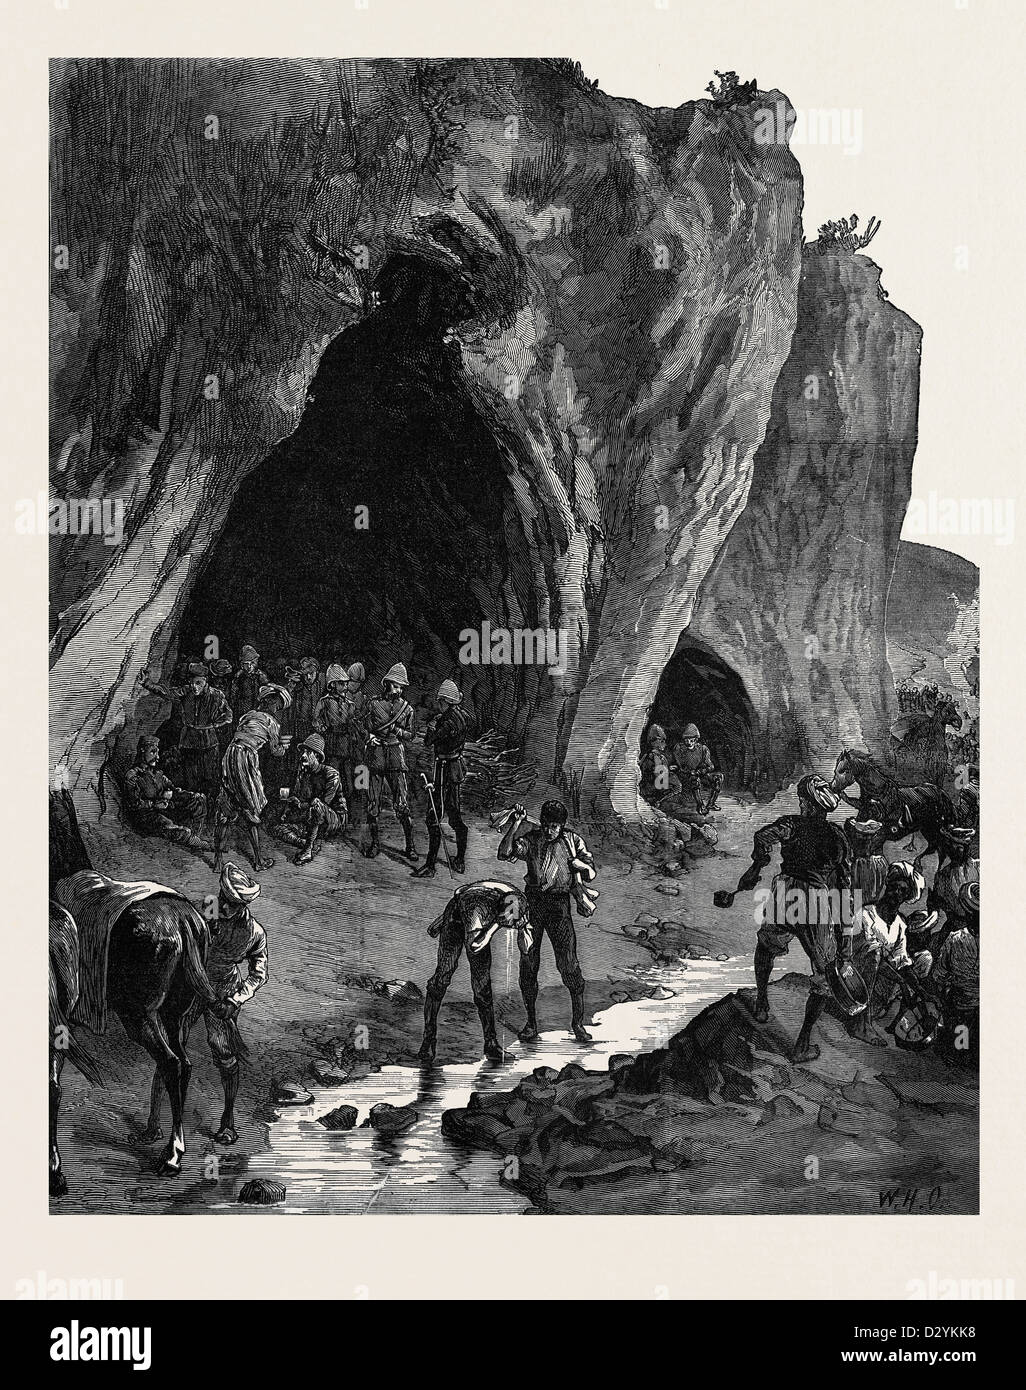 DER AFGHANISTAN-KRIEG: LUNDI KHANA KHYBER PASS HÖHLE WO SIR SAMUEL BROWNE UND PERSONAL 1879 BIWAKIERTEN Stockfoto